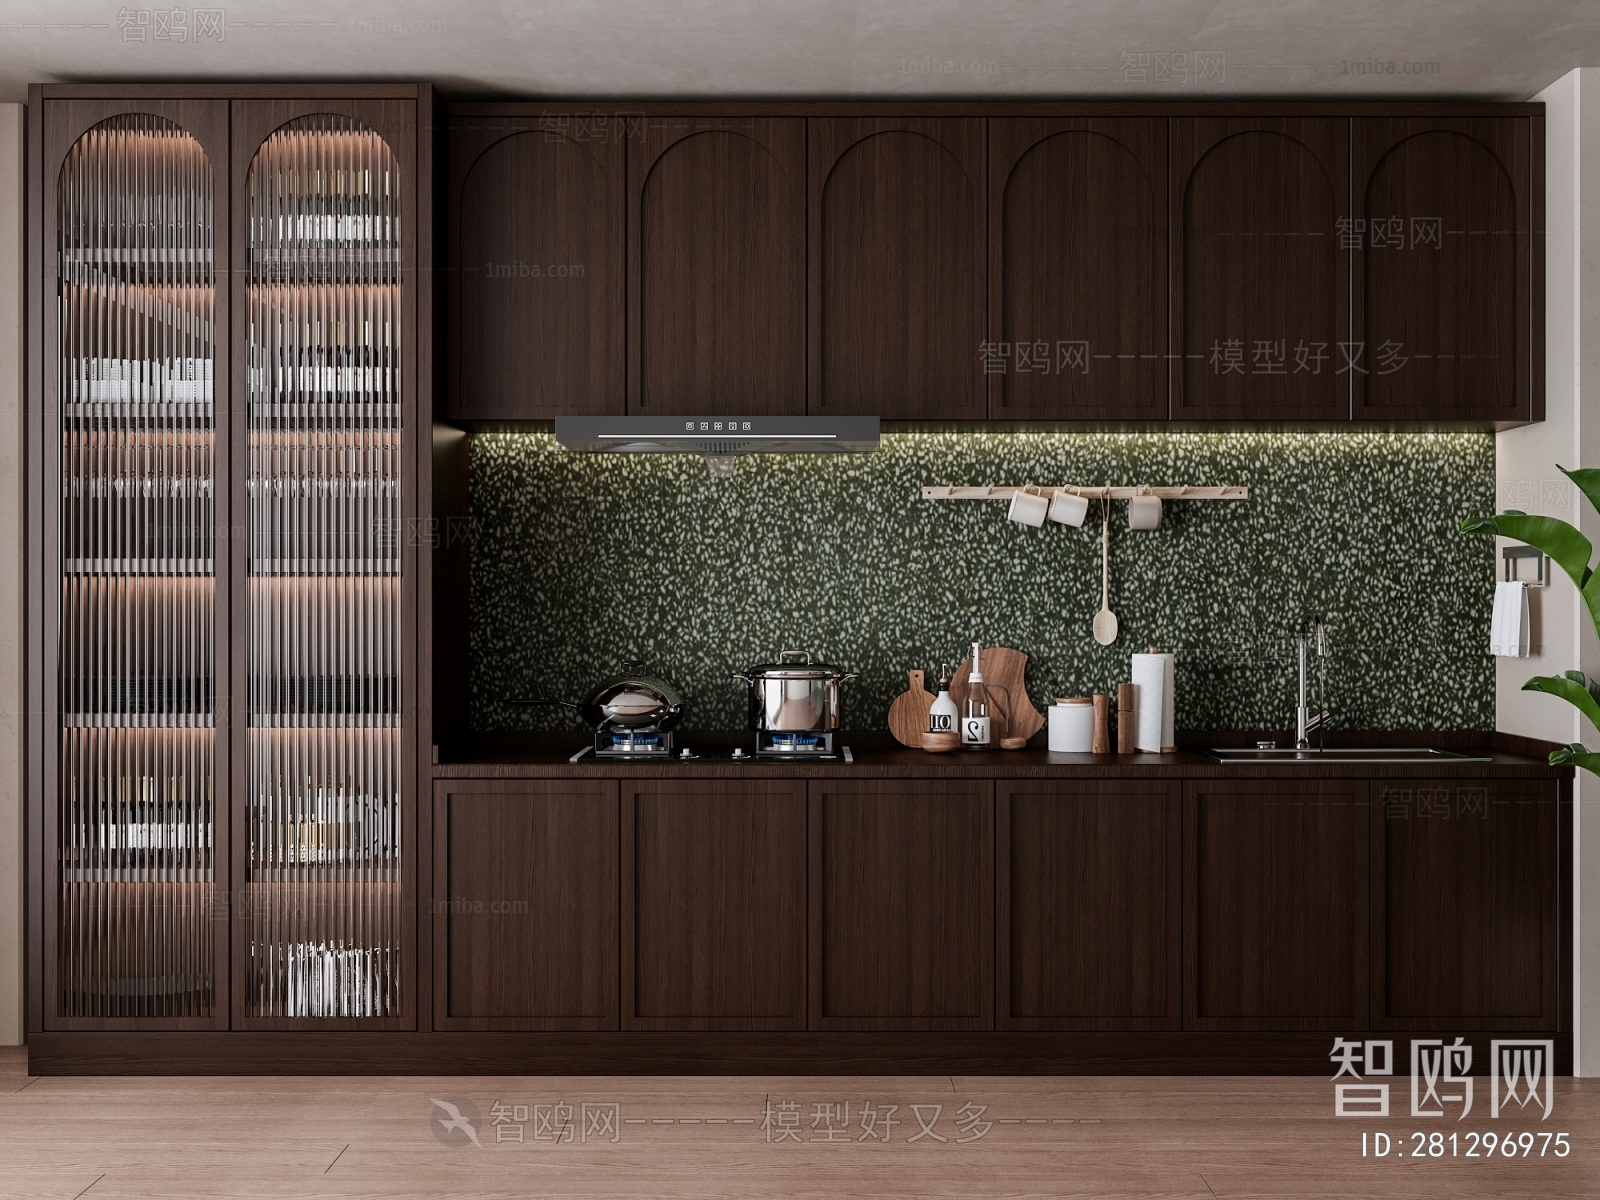 Retro Style Kitchen Cabinet